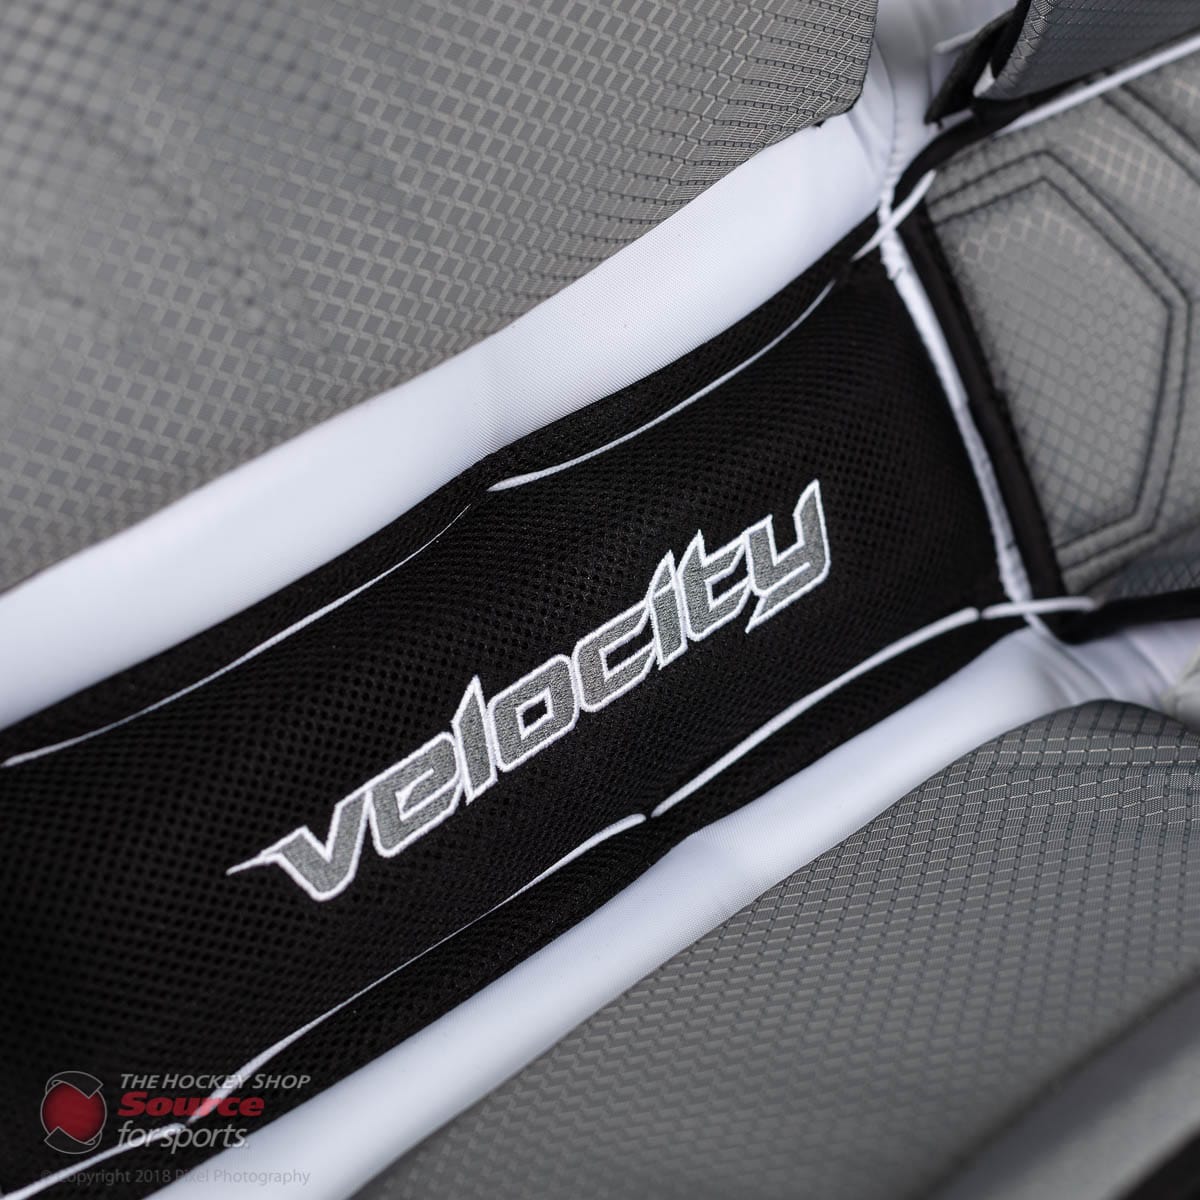 Vaughn Velocity VE8 Pro Senior Goalie Leg Pads